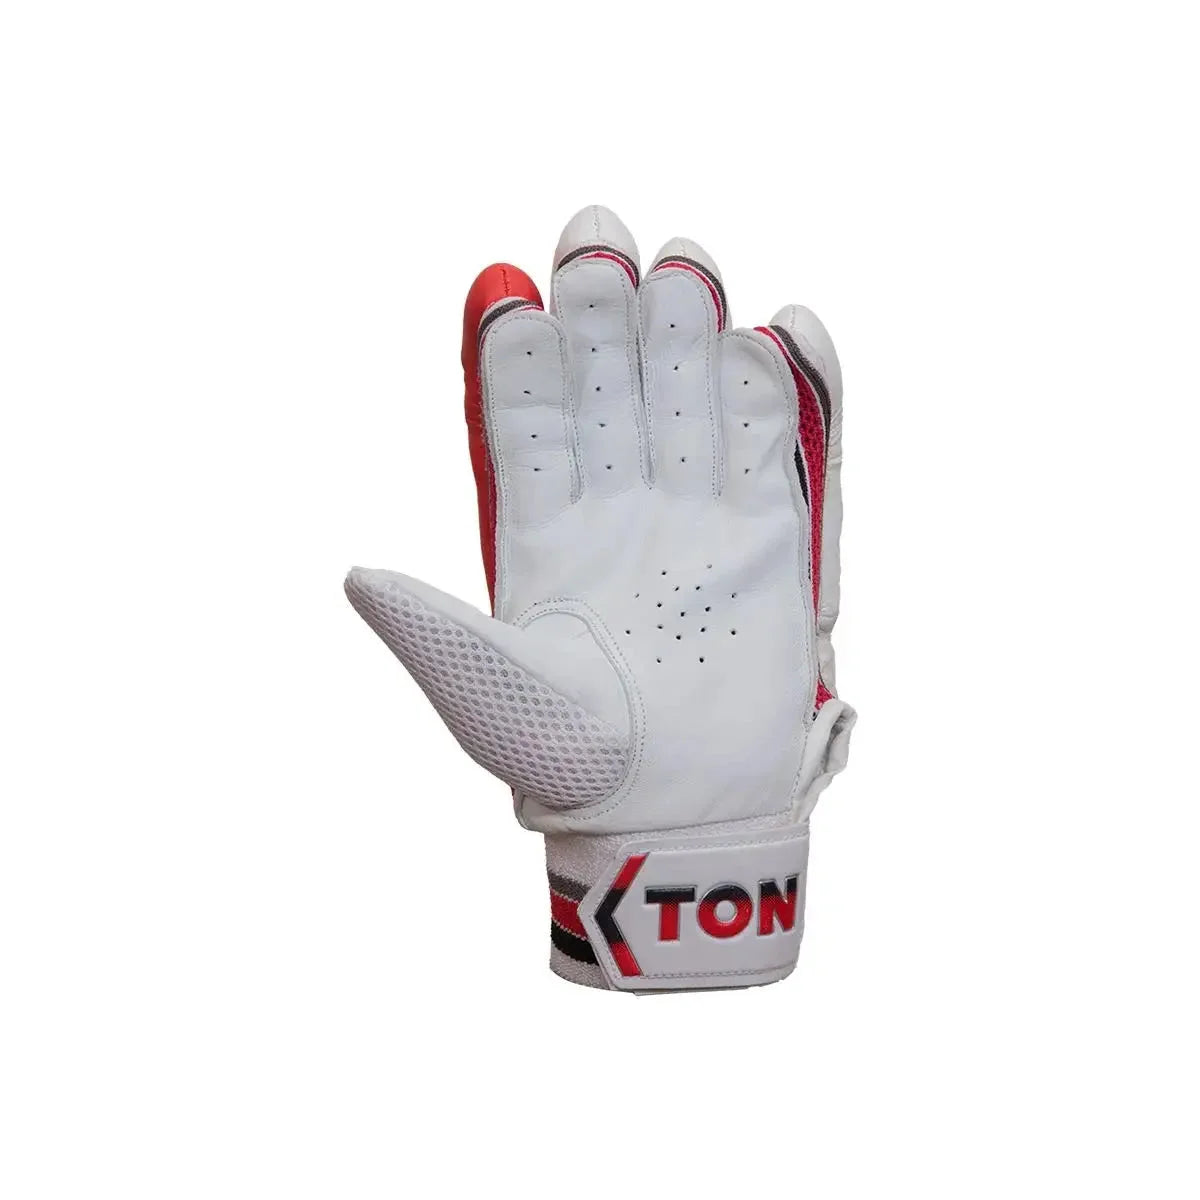 SS TON Glory Batting Gloves- High Quality Leather Palm - GLOVE - BATTING